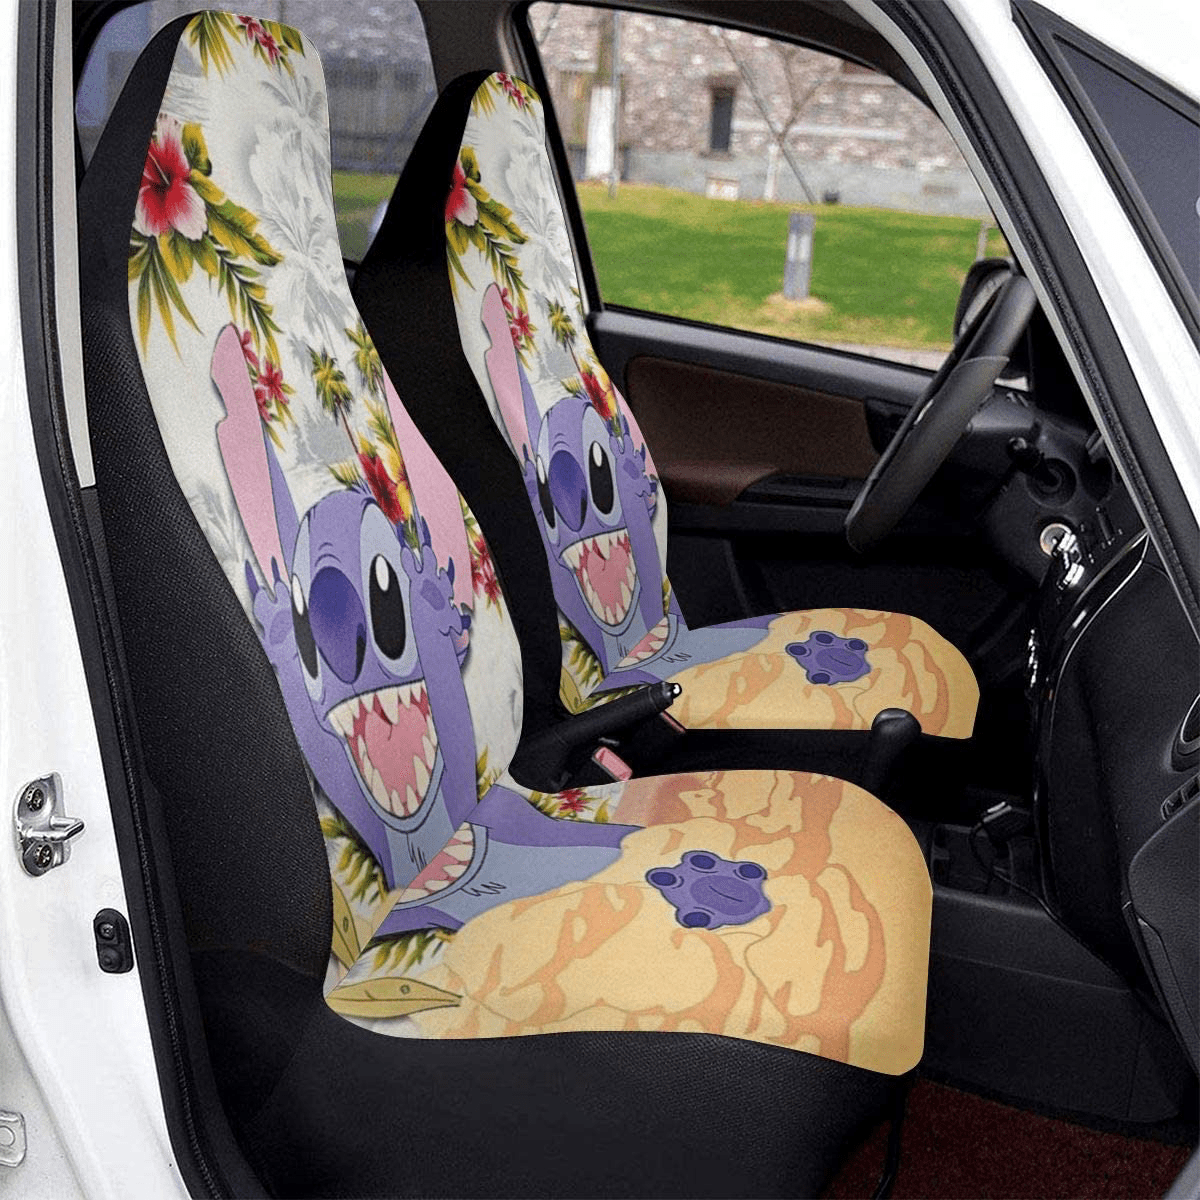 Shop for disney car accessories at walmart.com. Disney Discovery Stitch Car Seat Covers Shop